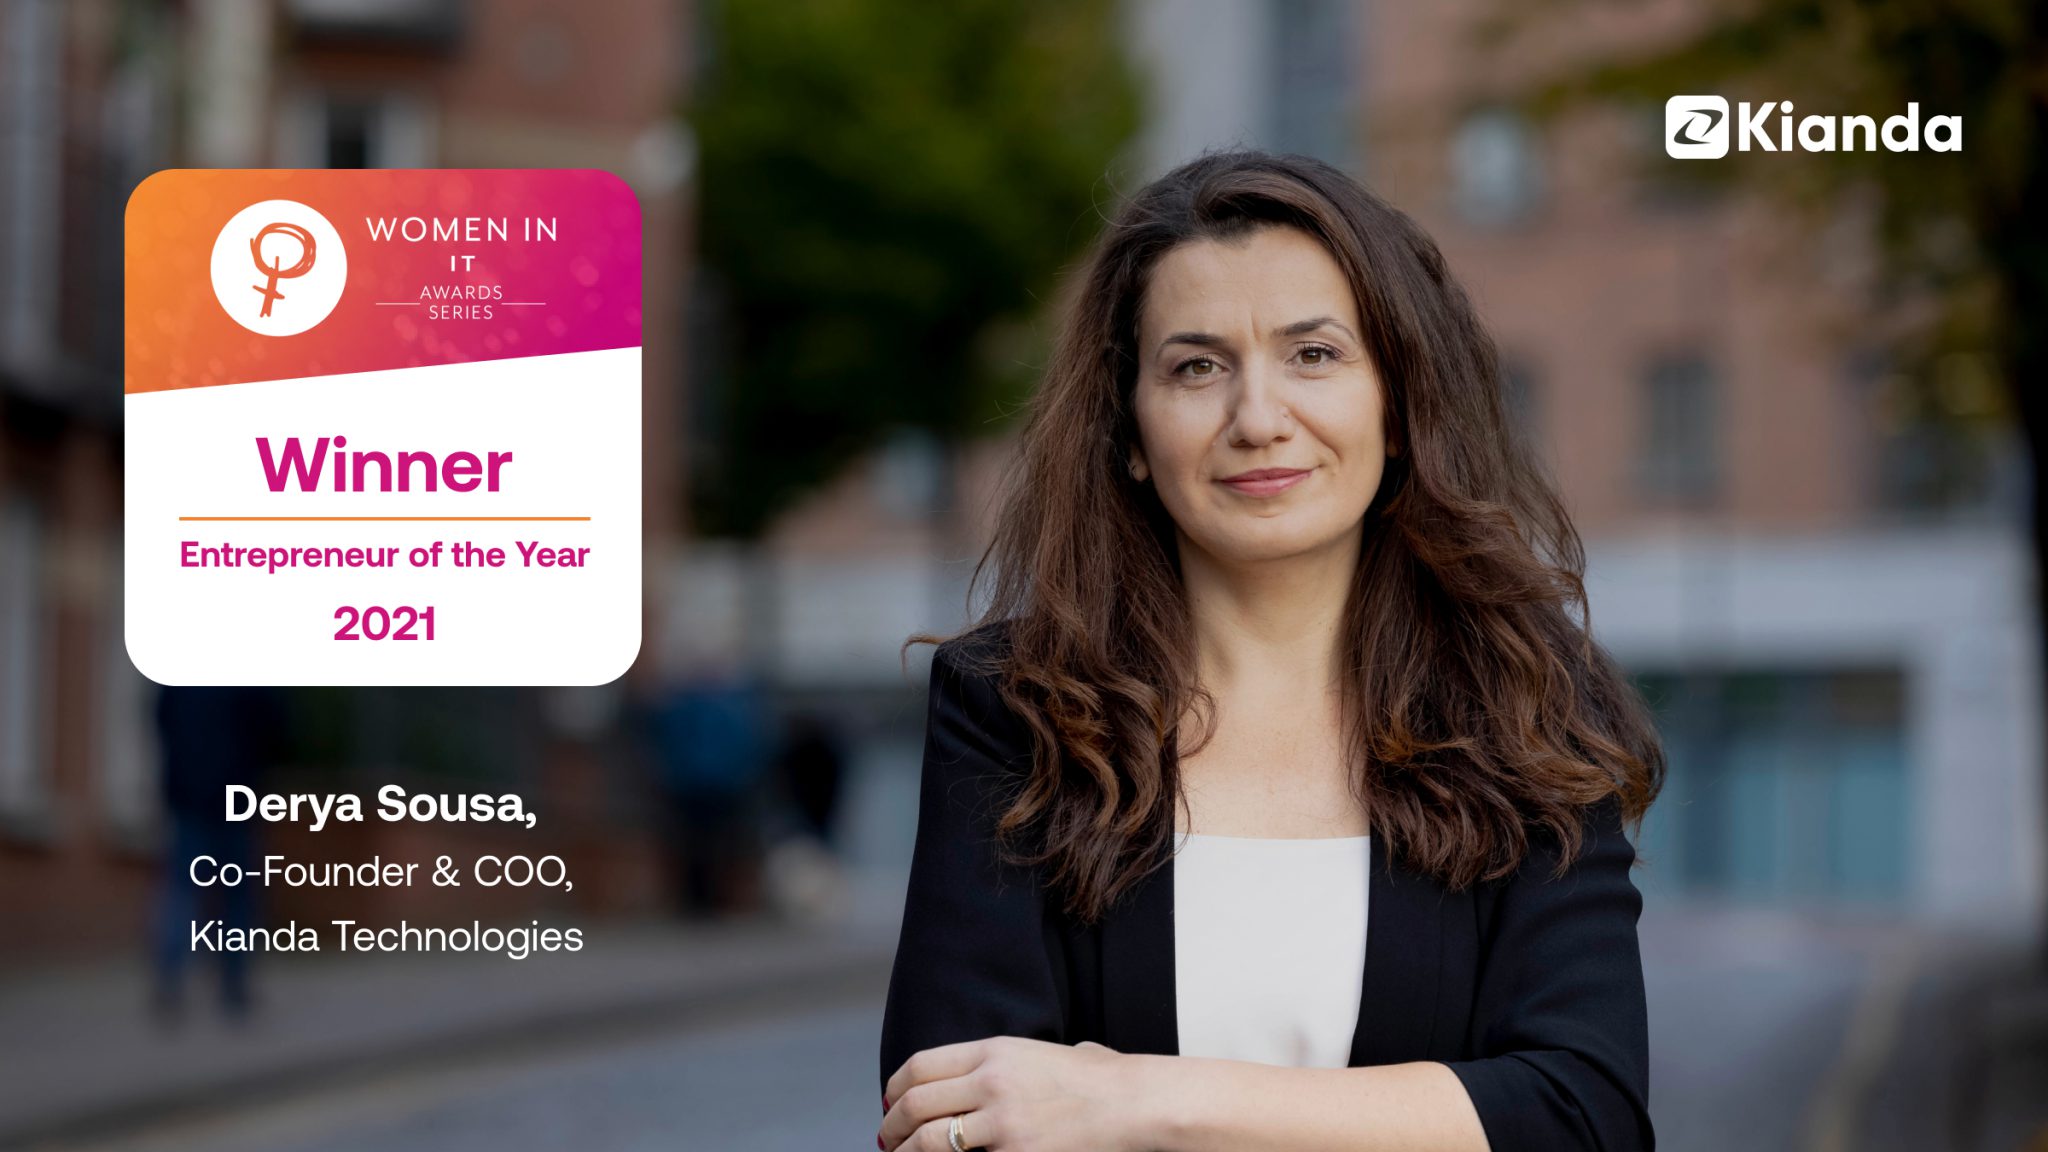 Derya Sousa, Co-Founder / COO KIanda Technologies winner of Women in IT Awards Entrepreneur of the Year 2021